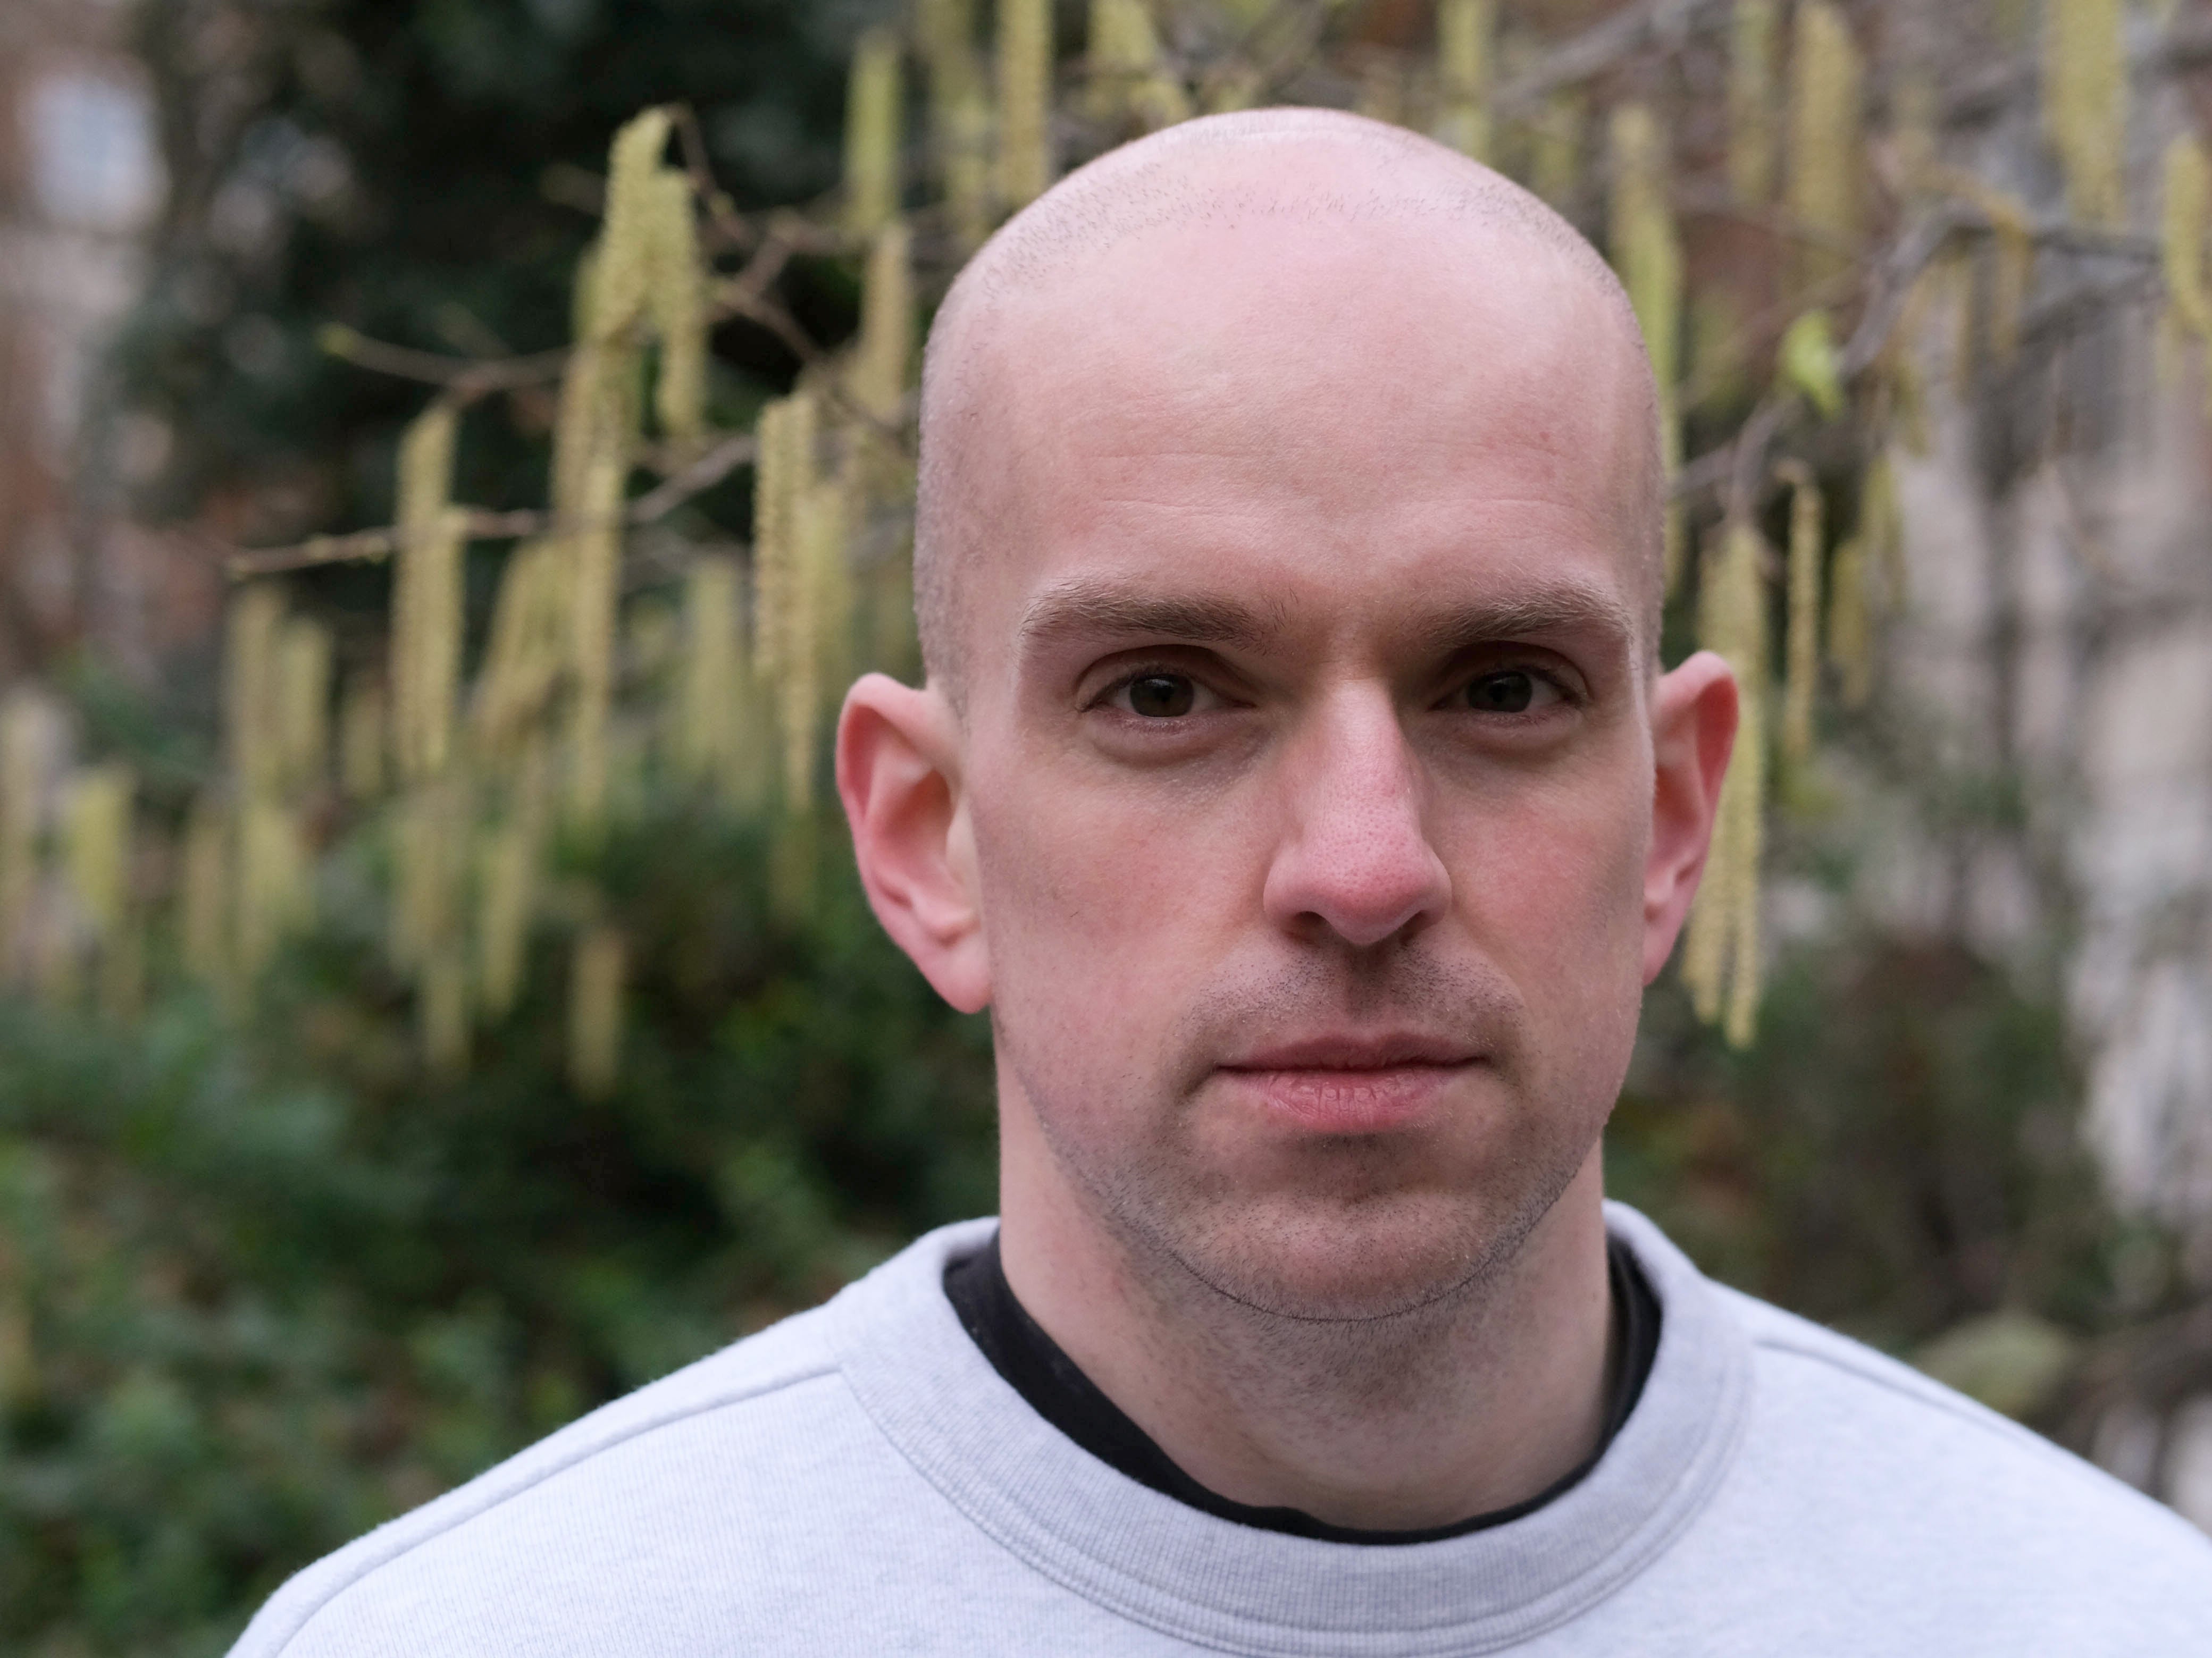 Poet Andrew McMillan releases his debut novel ‘Pity’ this week